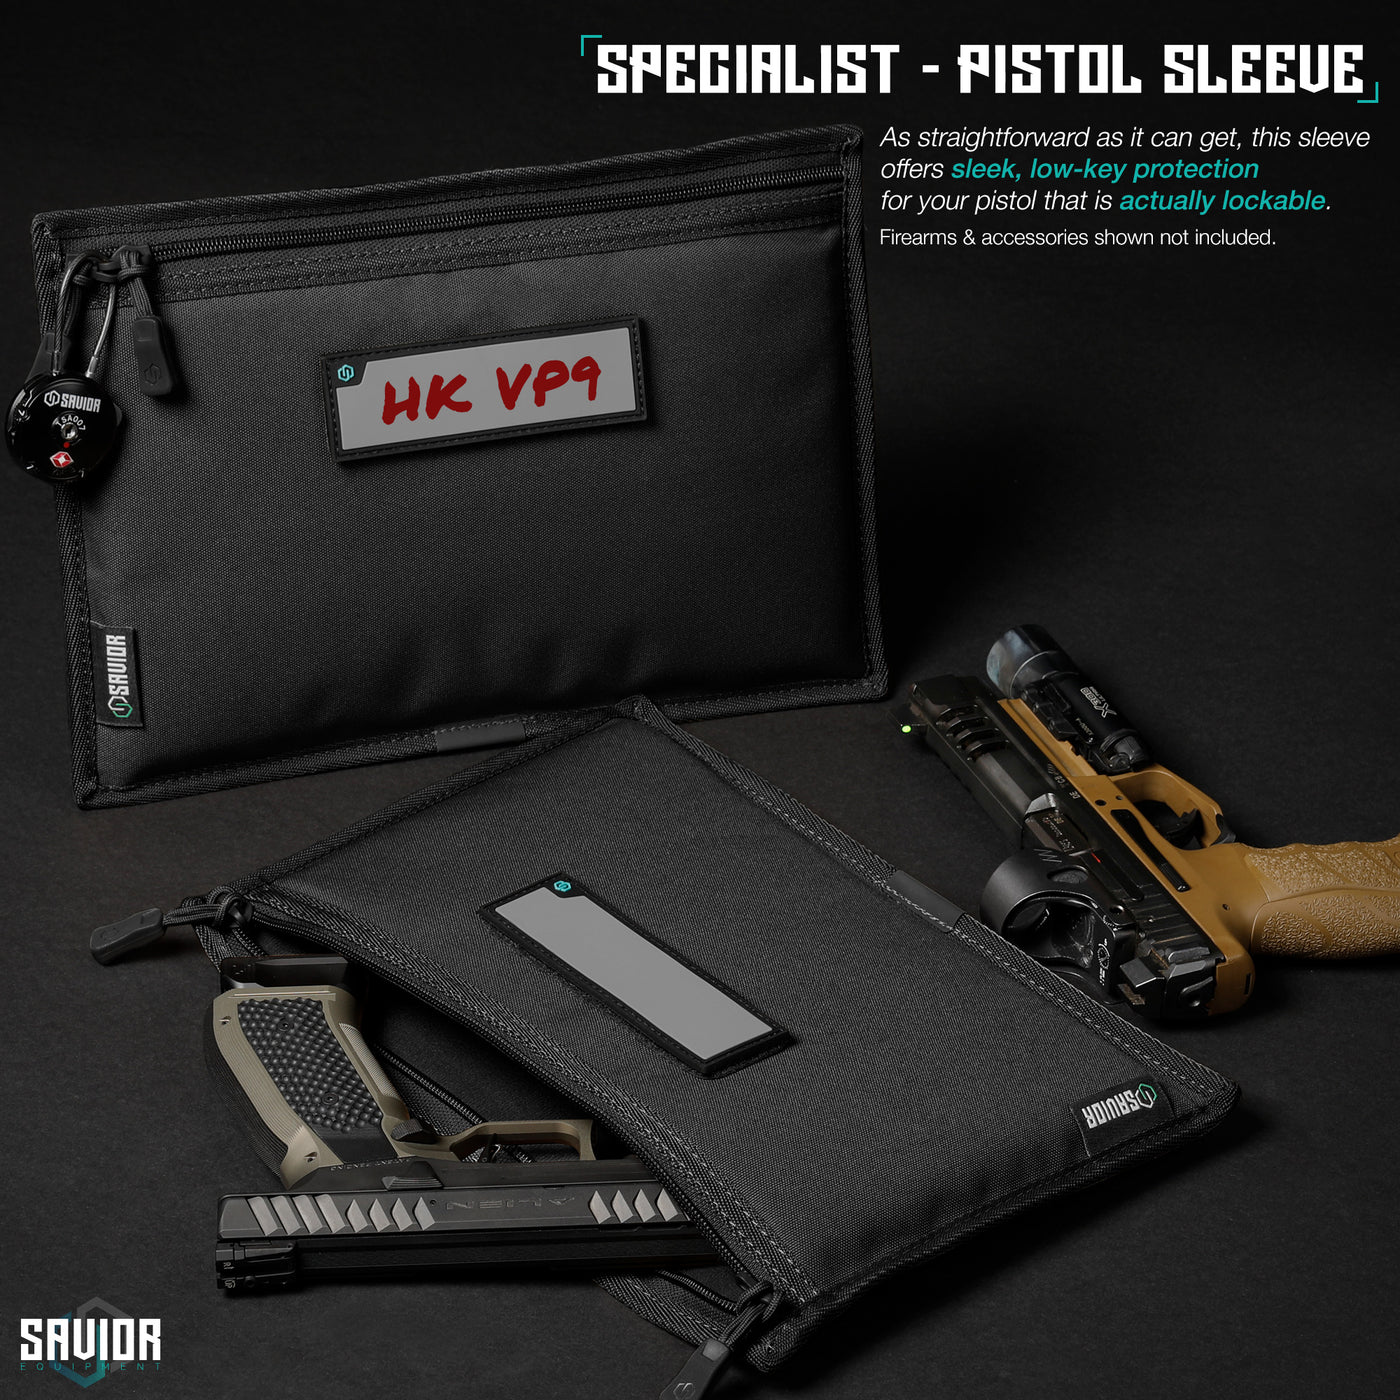 Pistol Sleeve For Specialist - Range Bag - 3 Pack